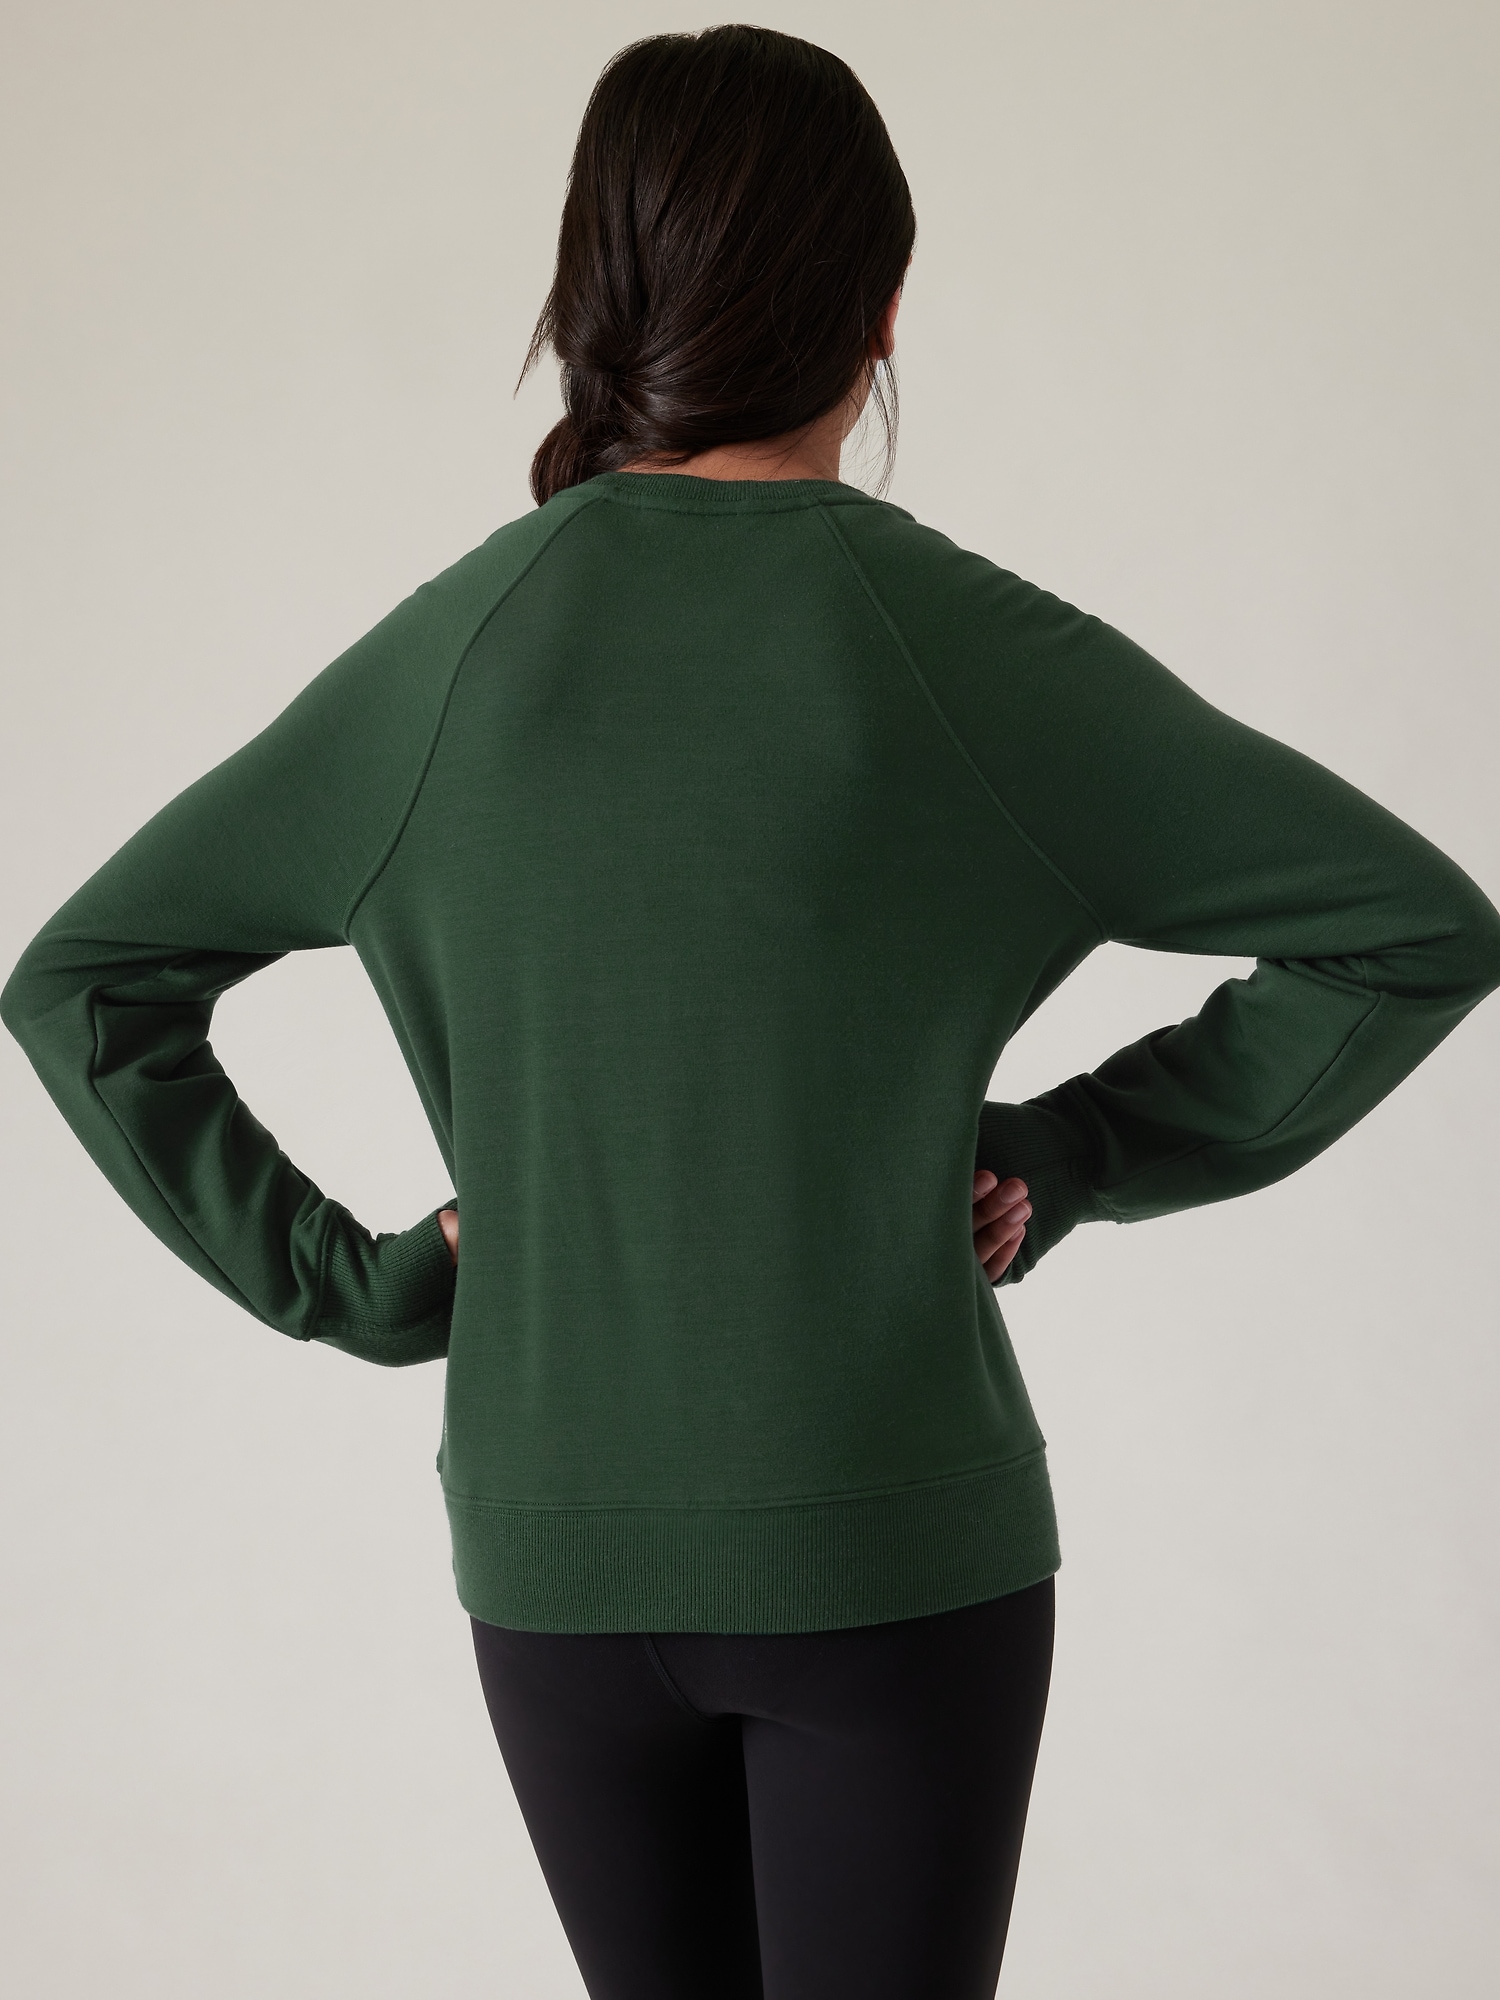 Athleta Girl Sweatshirt Kangaroo Pocket Thumbholes Sage Green Size 12